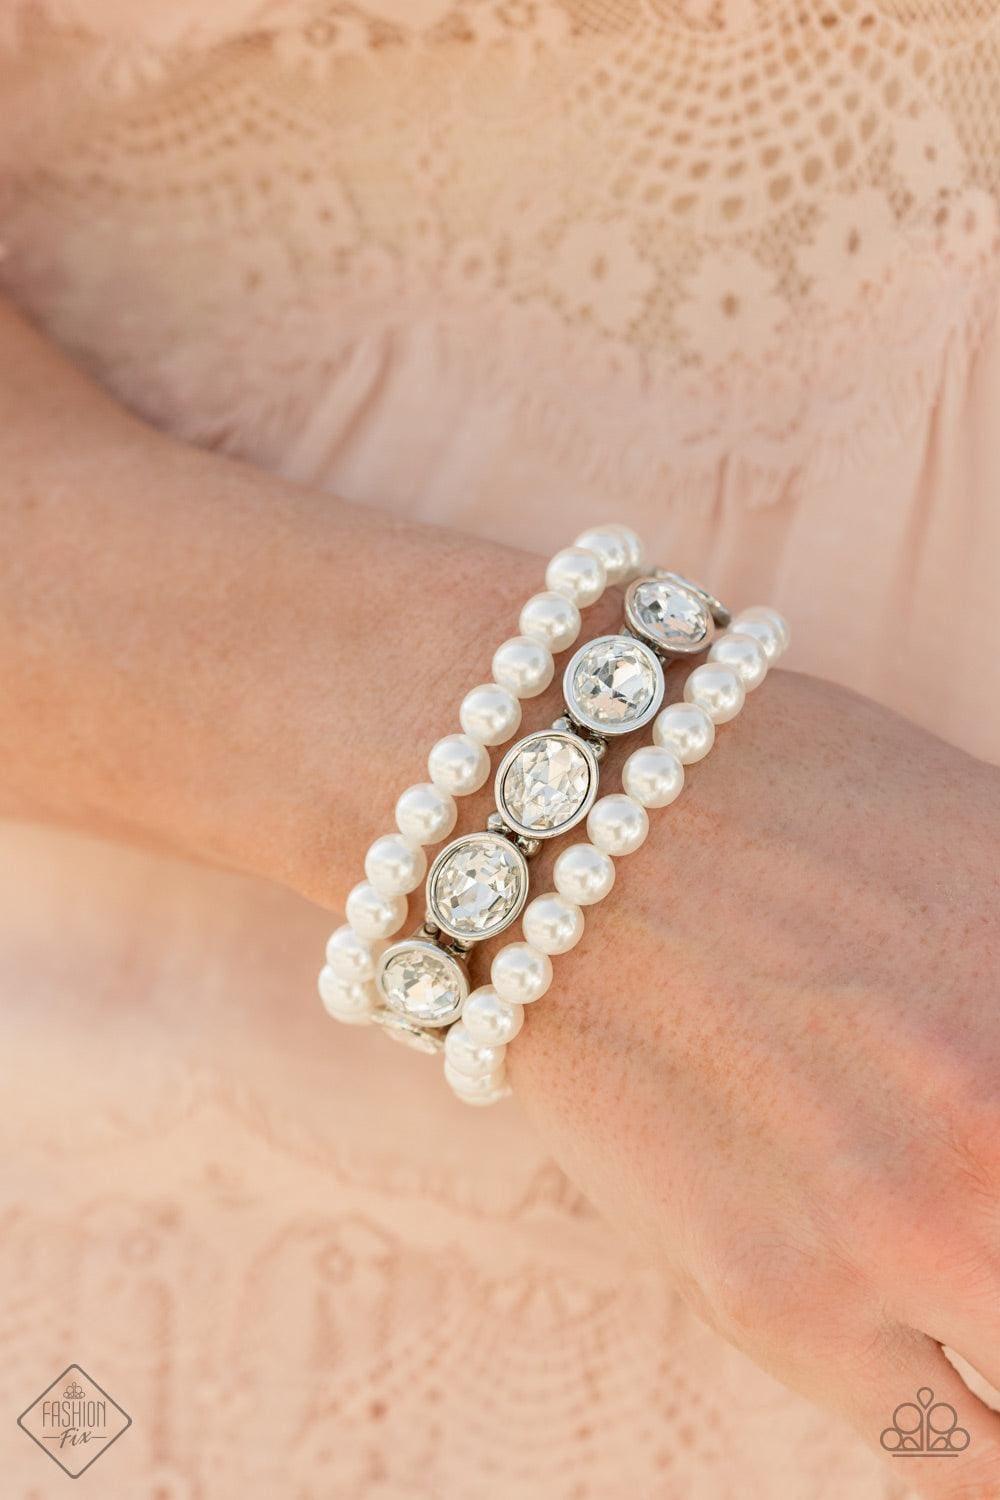 Paparazzi Accessories - Flawlessly Flattering - White Bracelet - Bling by JessieK